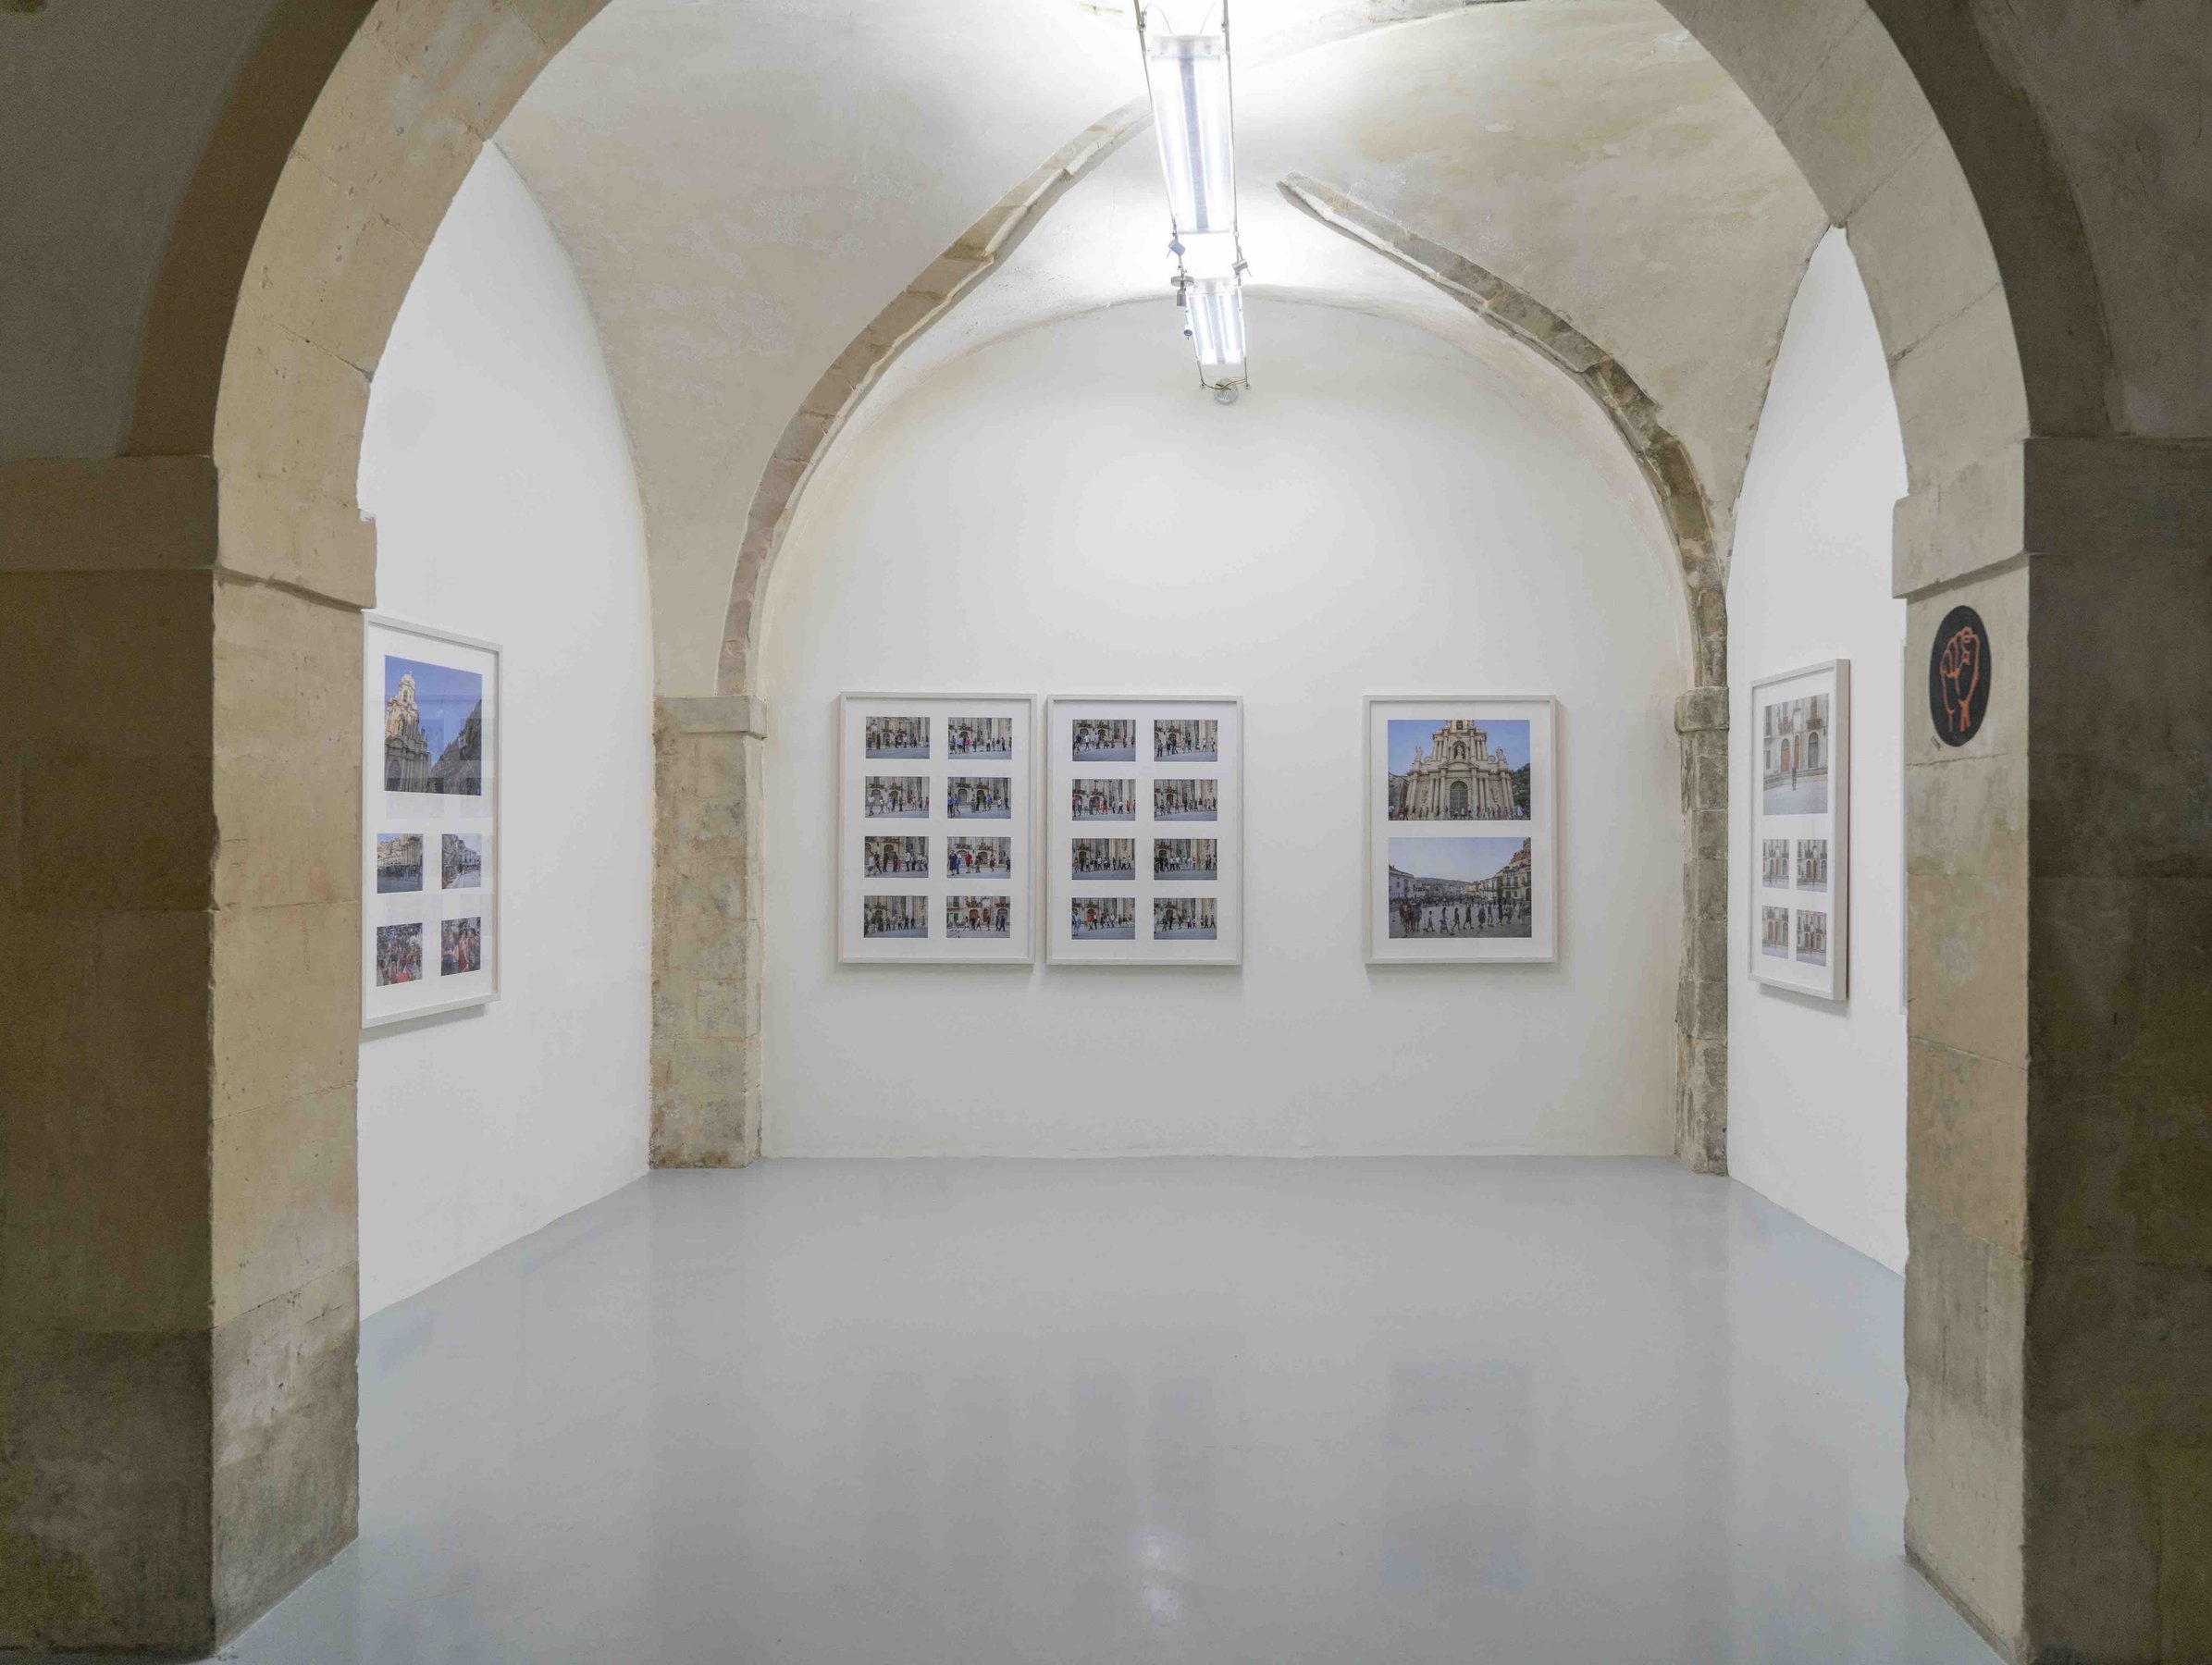 Adrian Paci, The Encounter, installation view at laveronica arte contemporane